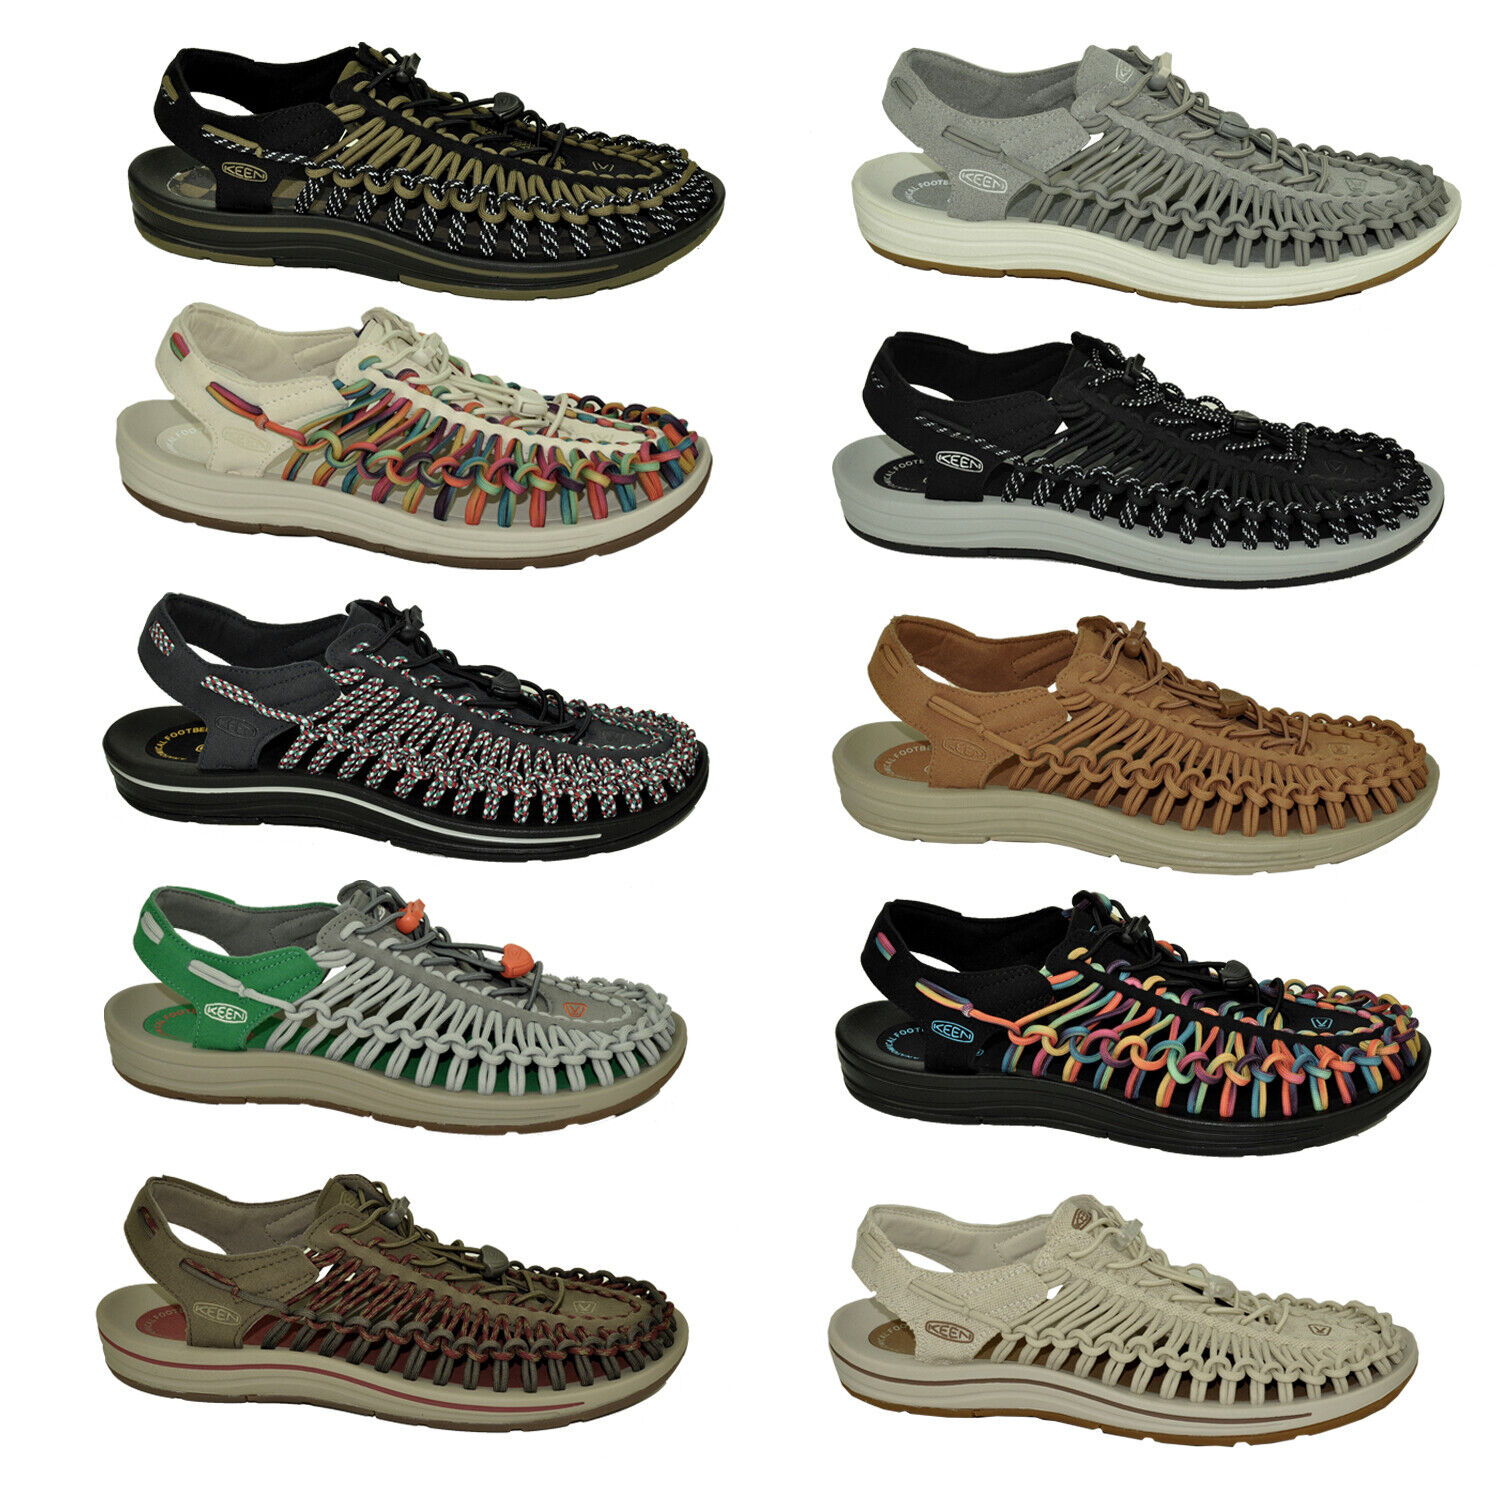 KEEN Uneek Sandalen Trekkingsandalen Ultra Leicht Leder Canvas Herren Sneaker Modell - Farbe 1026340 - Olive Schuhgröße EUR 42 - UK 8 - US 9